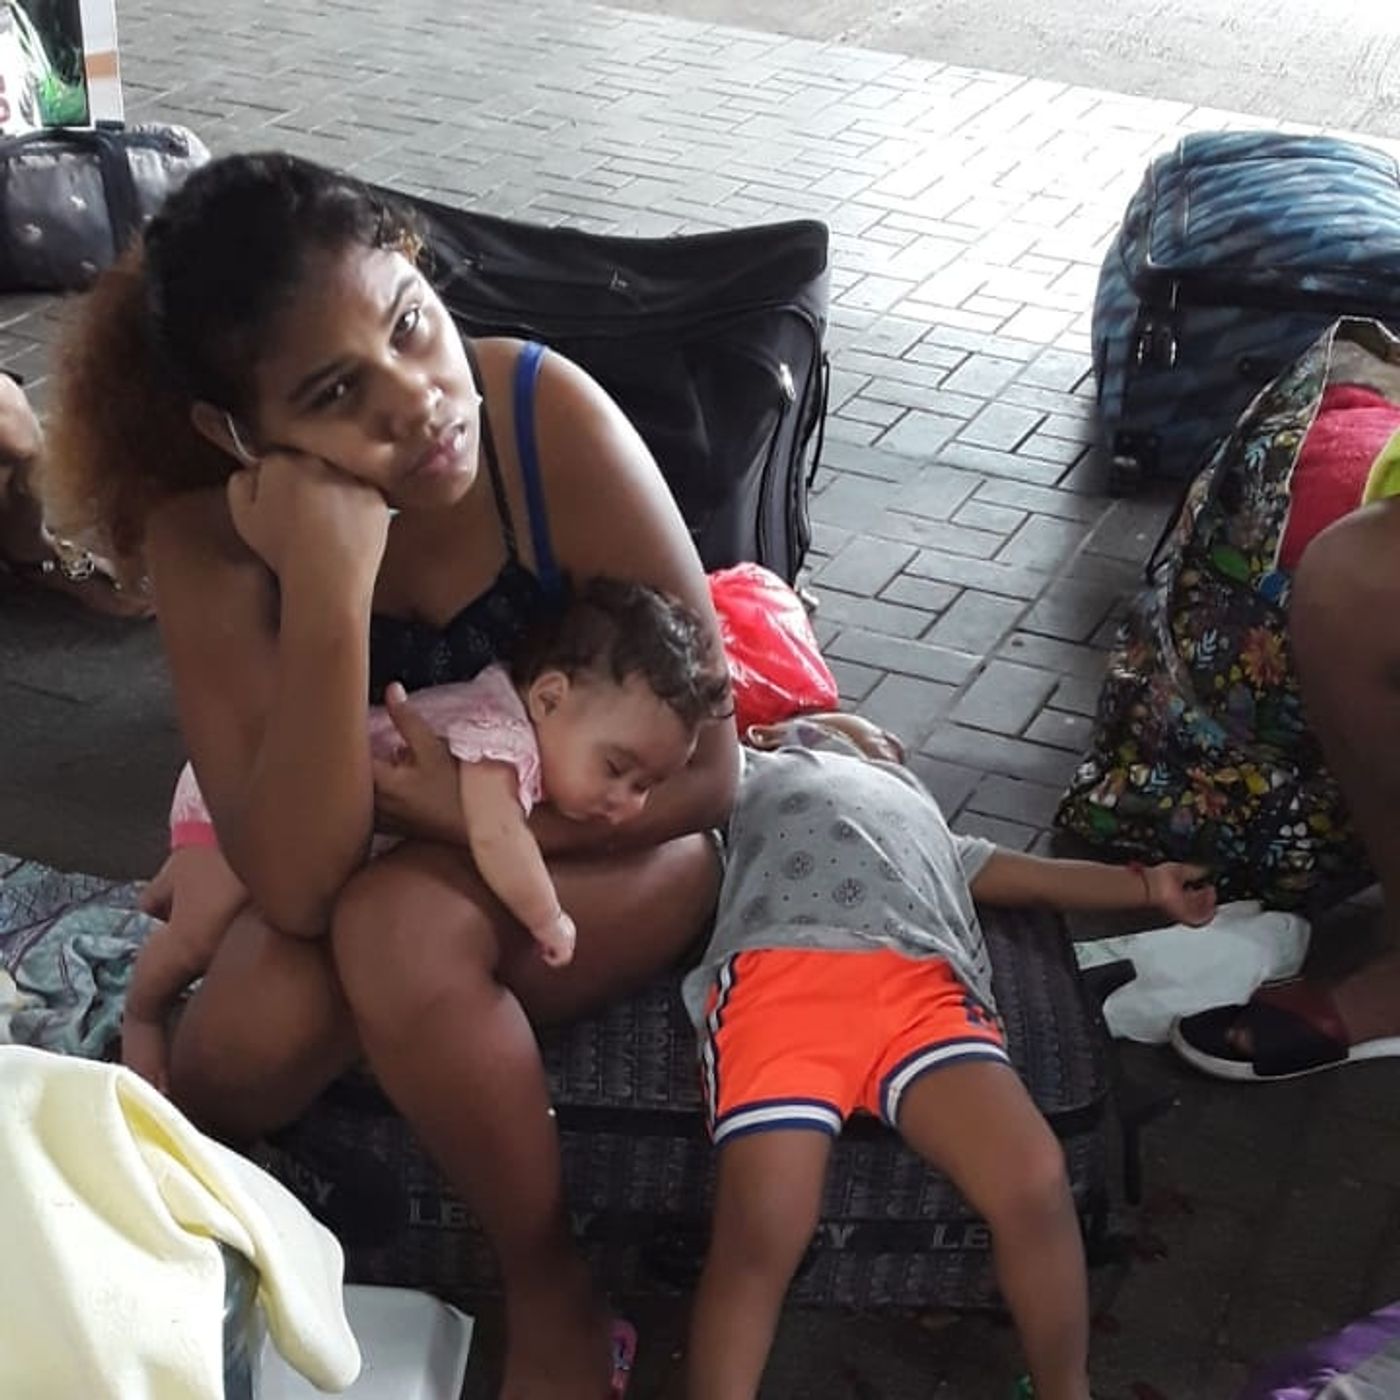 #ENTREVISTA | Situación de nicaraguenses varados en Panamá es crítica: dos menores en riesgo